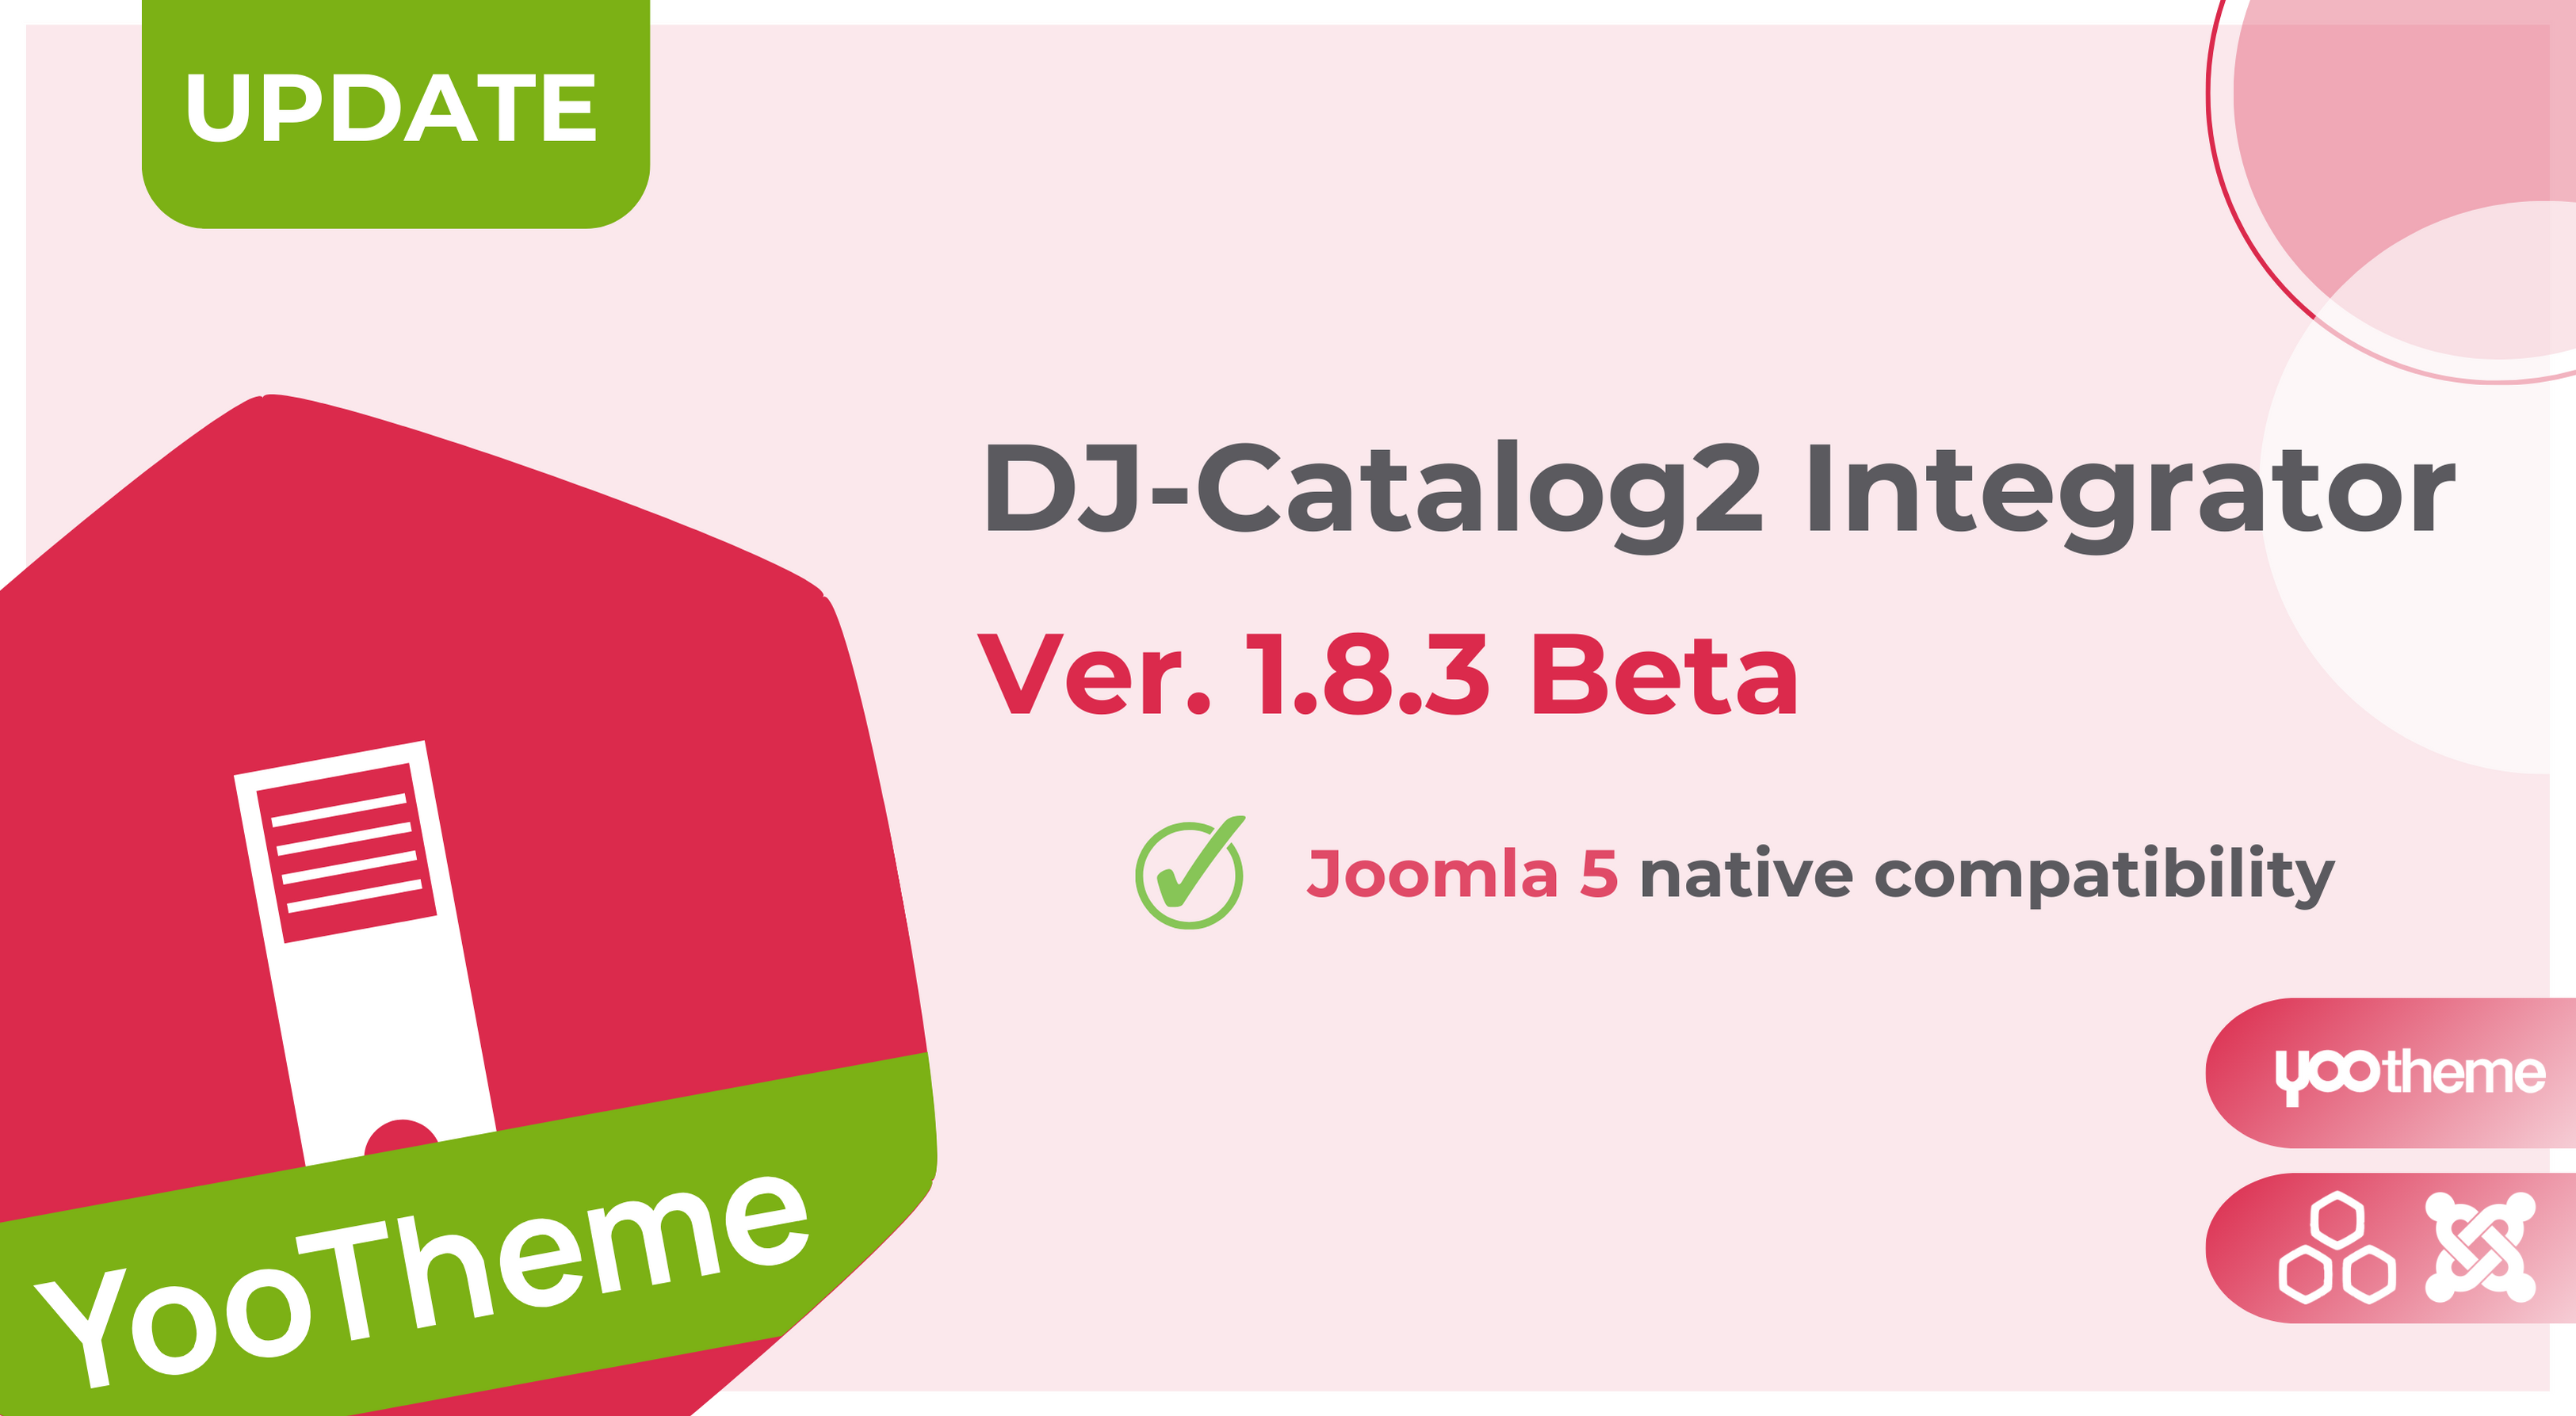 DJ-Catalog2 Integrator for Joomla 5